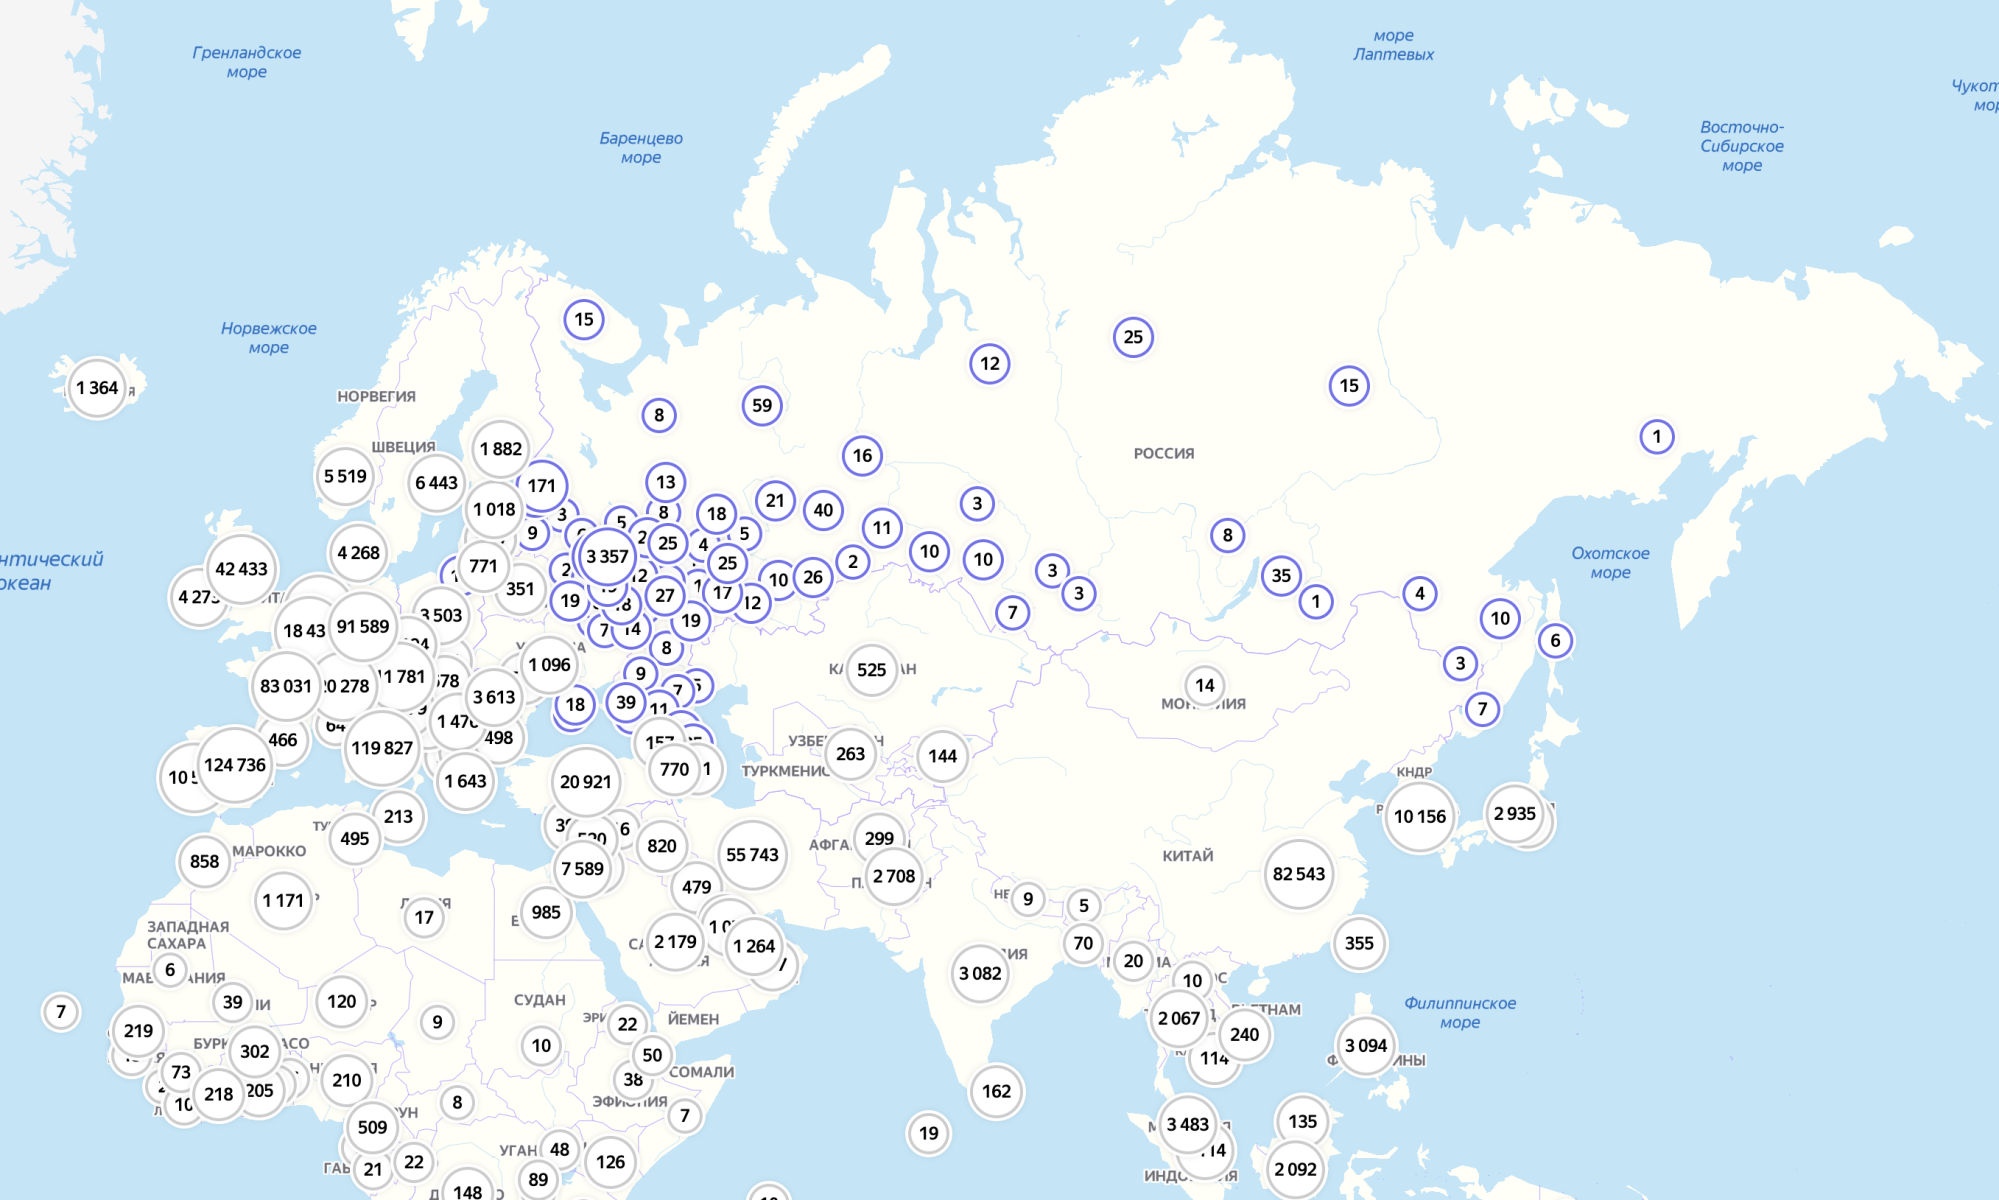 Rusyada Hangi Şehirlerde Koronavirüs var